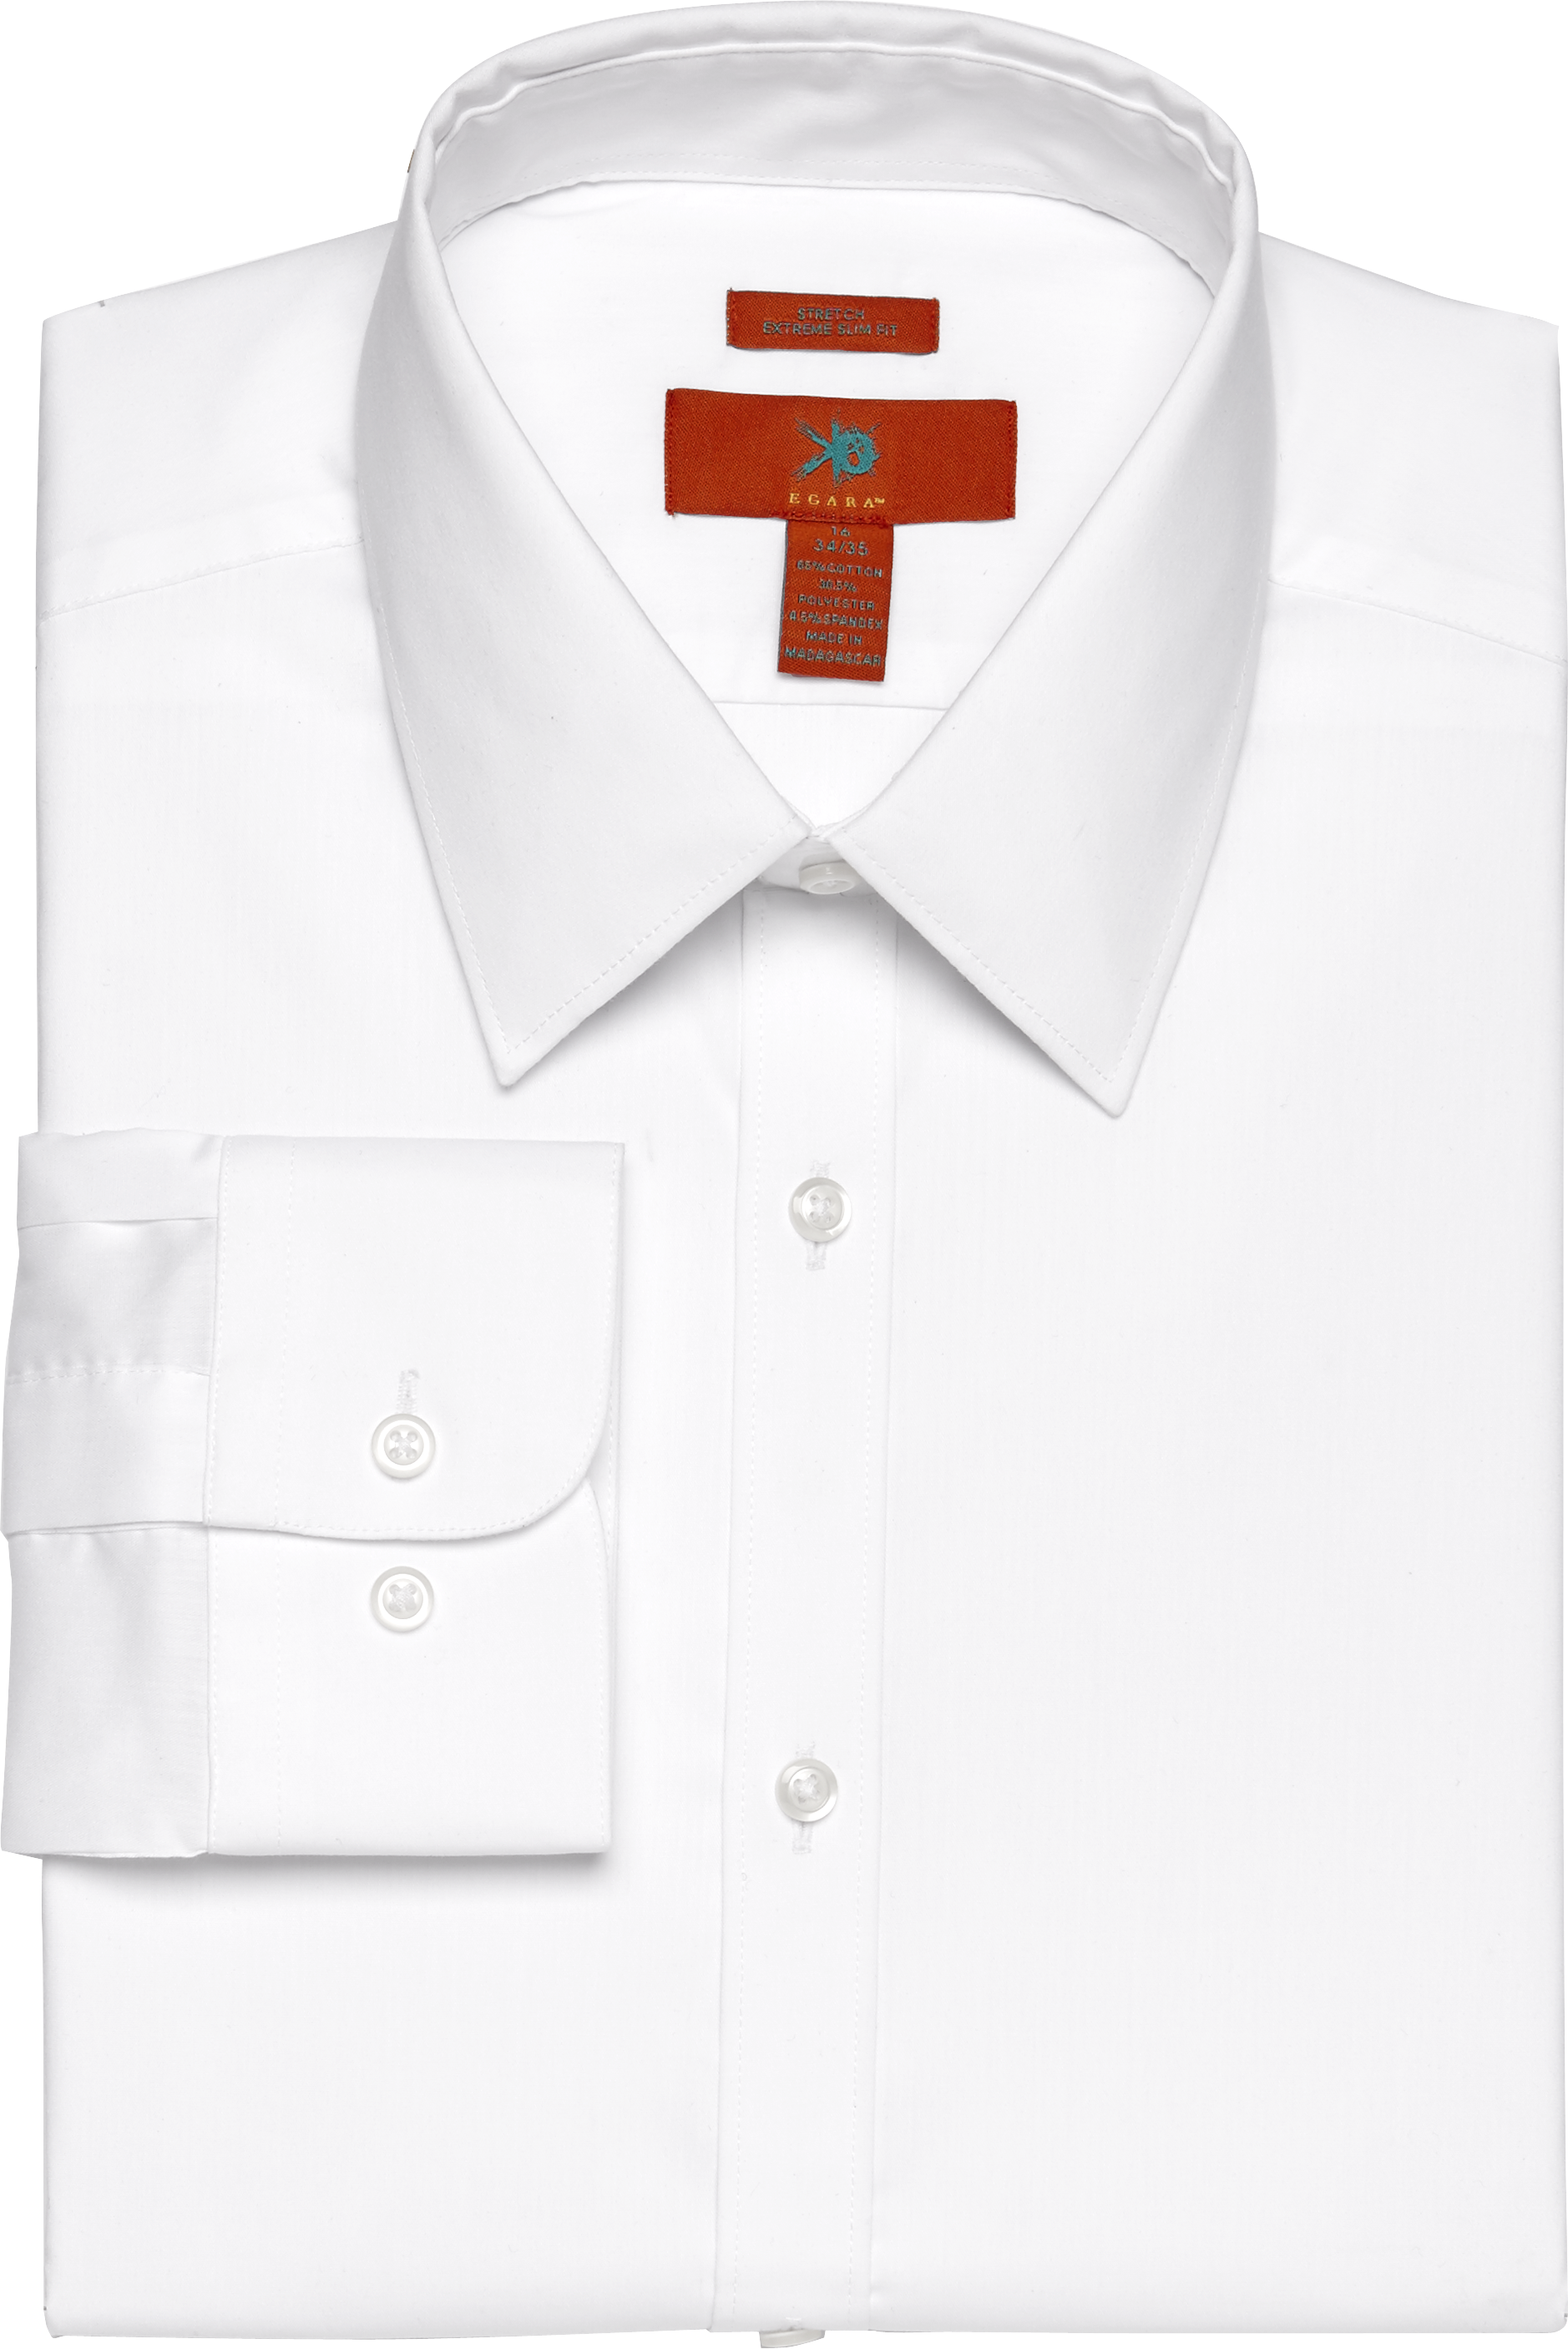 mens white dress shirts | Dresses Images 2022